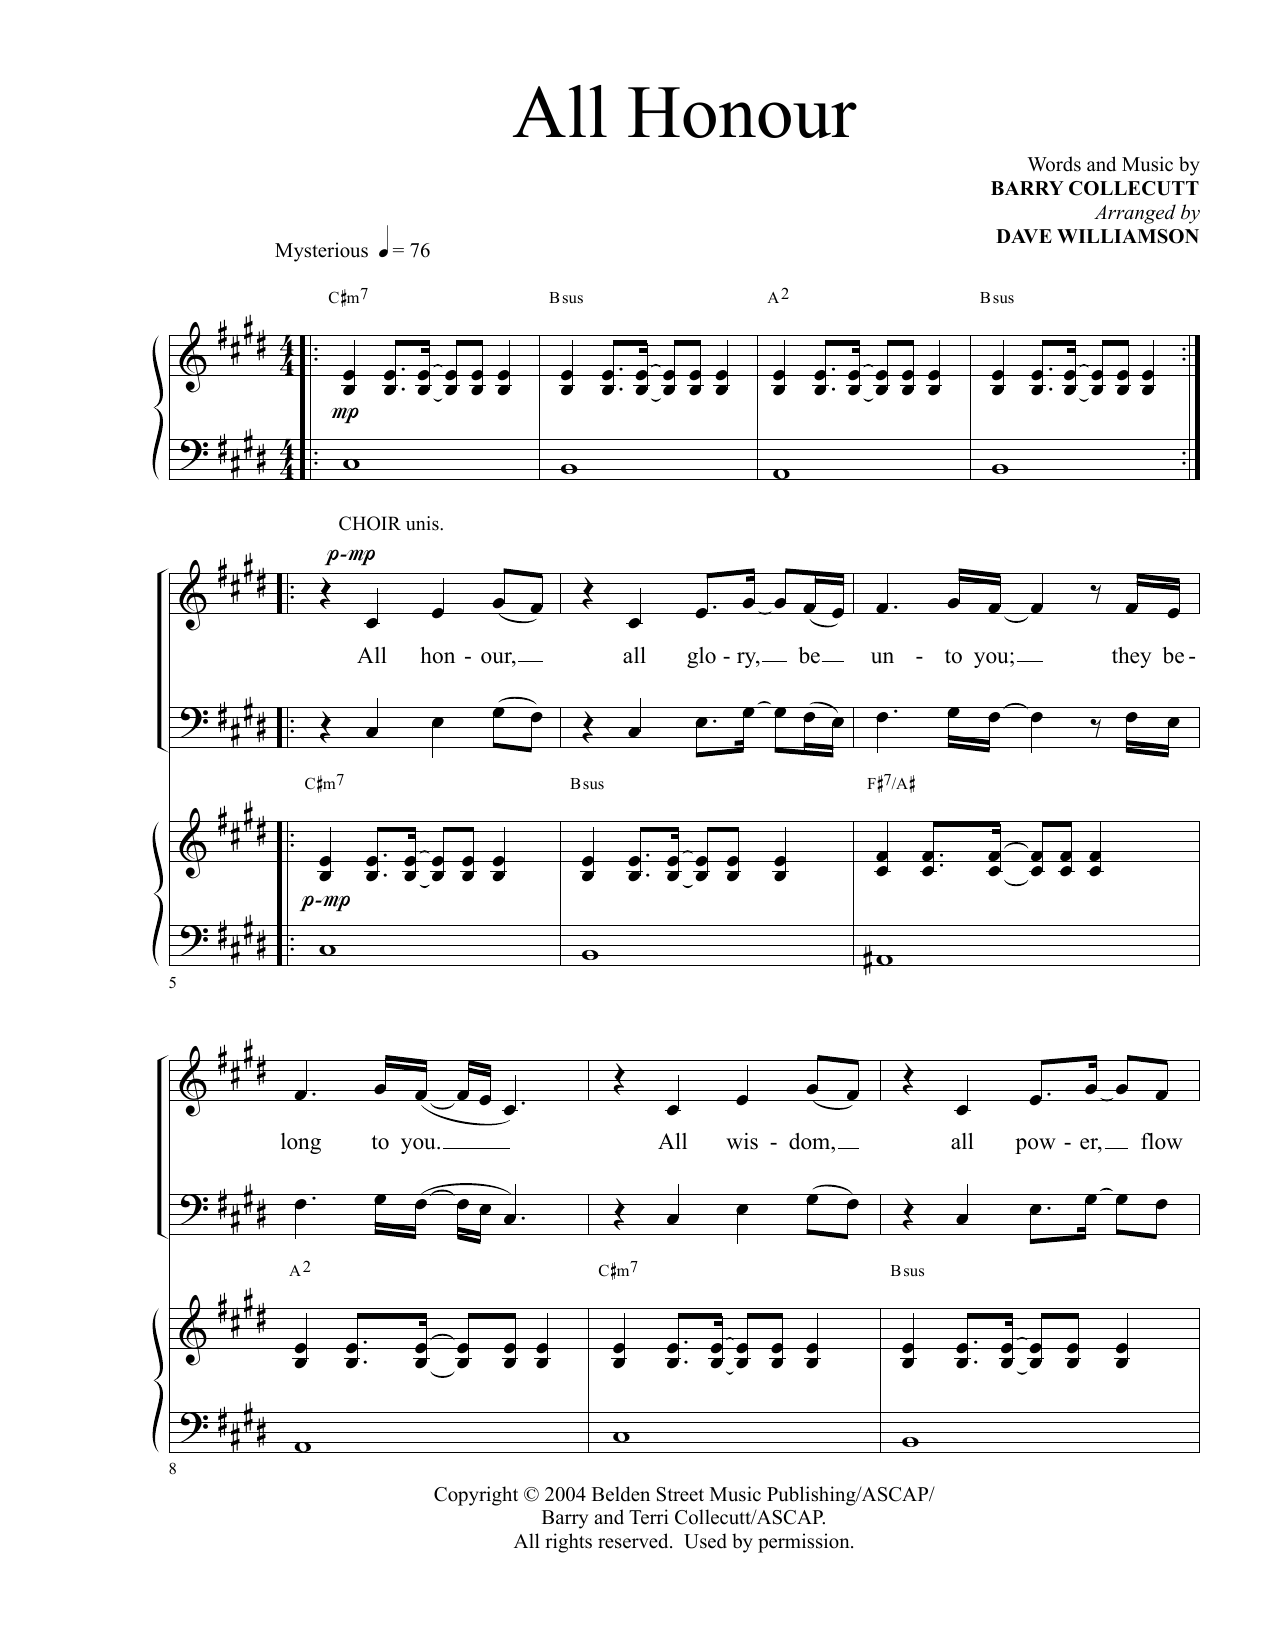 Barry & Terri Collecutt All Honour (arr. Dave Williamson) Sheet Music Notes & Chords for SATB Choir - Download or Print PDF